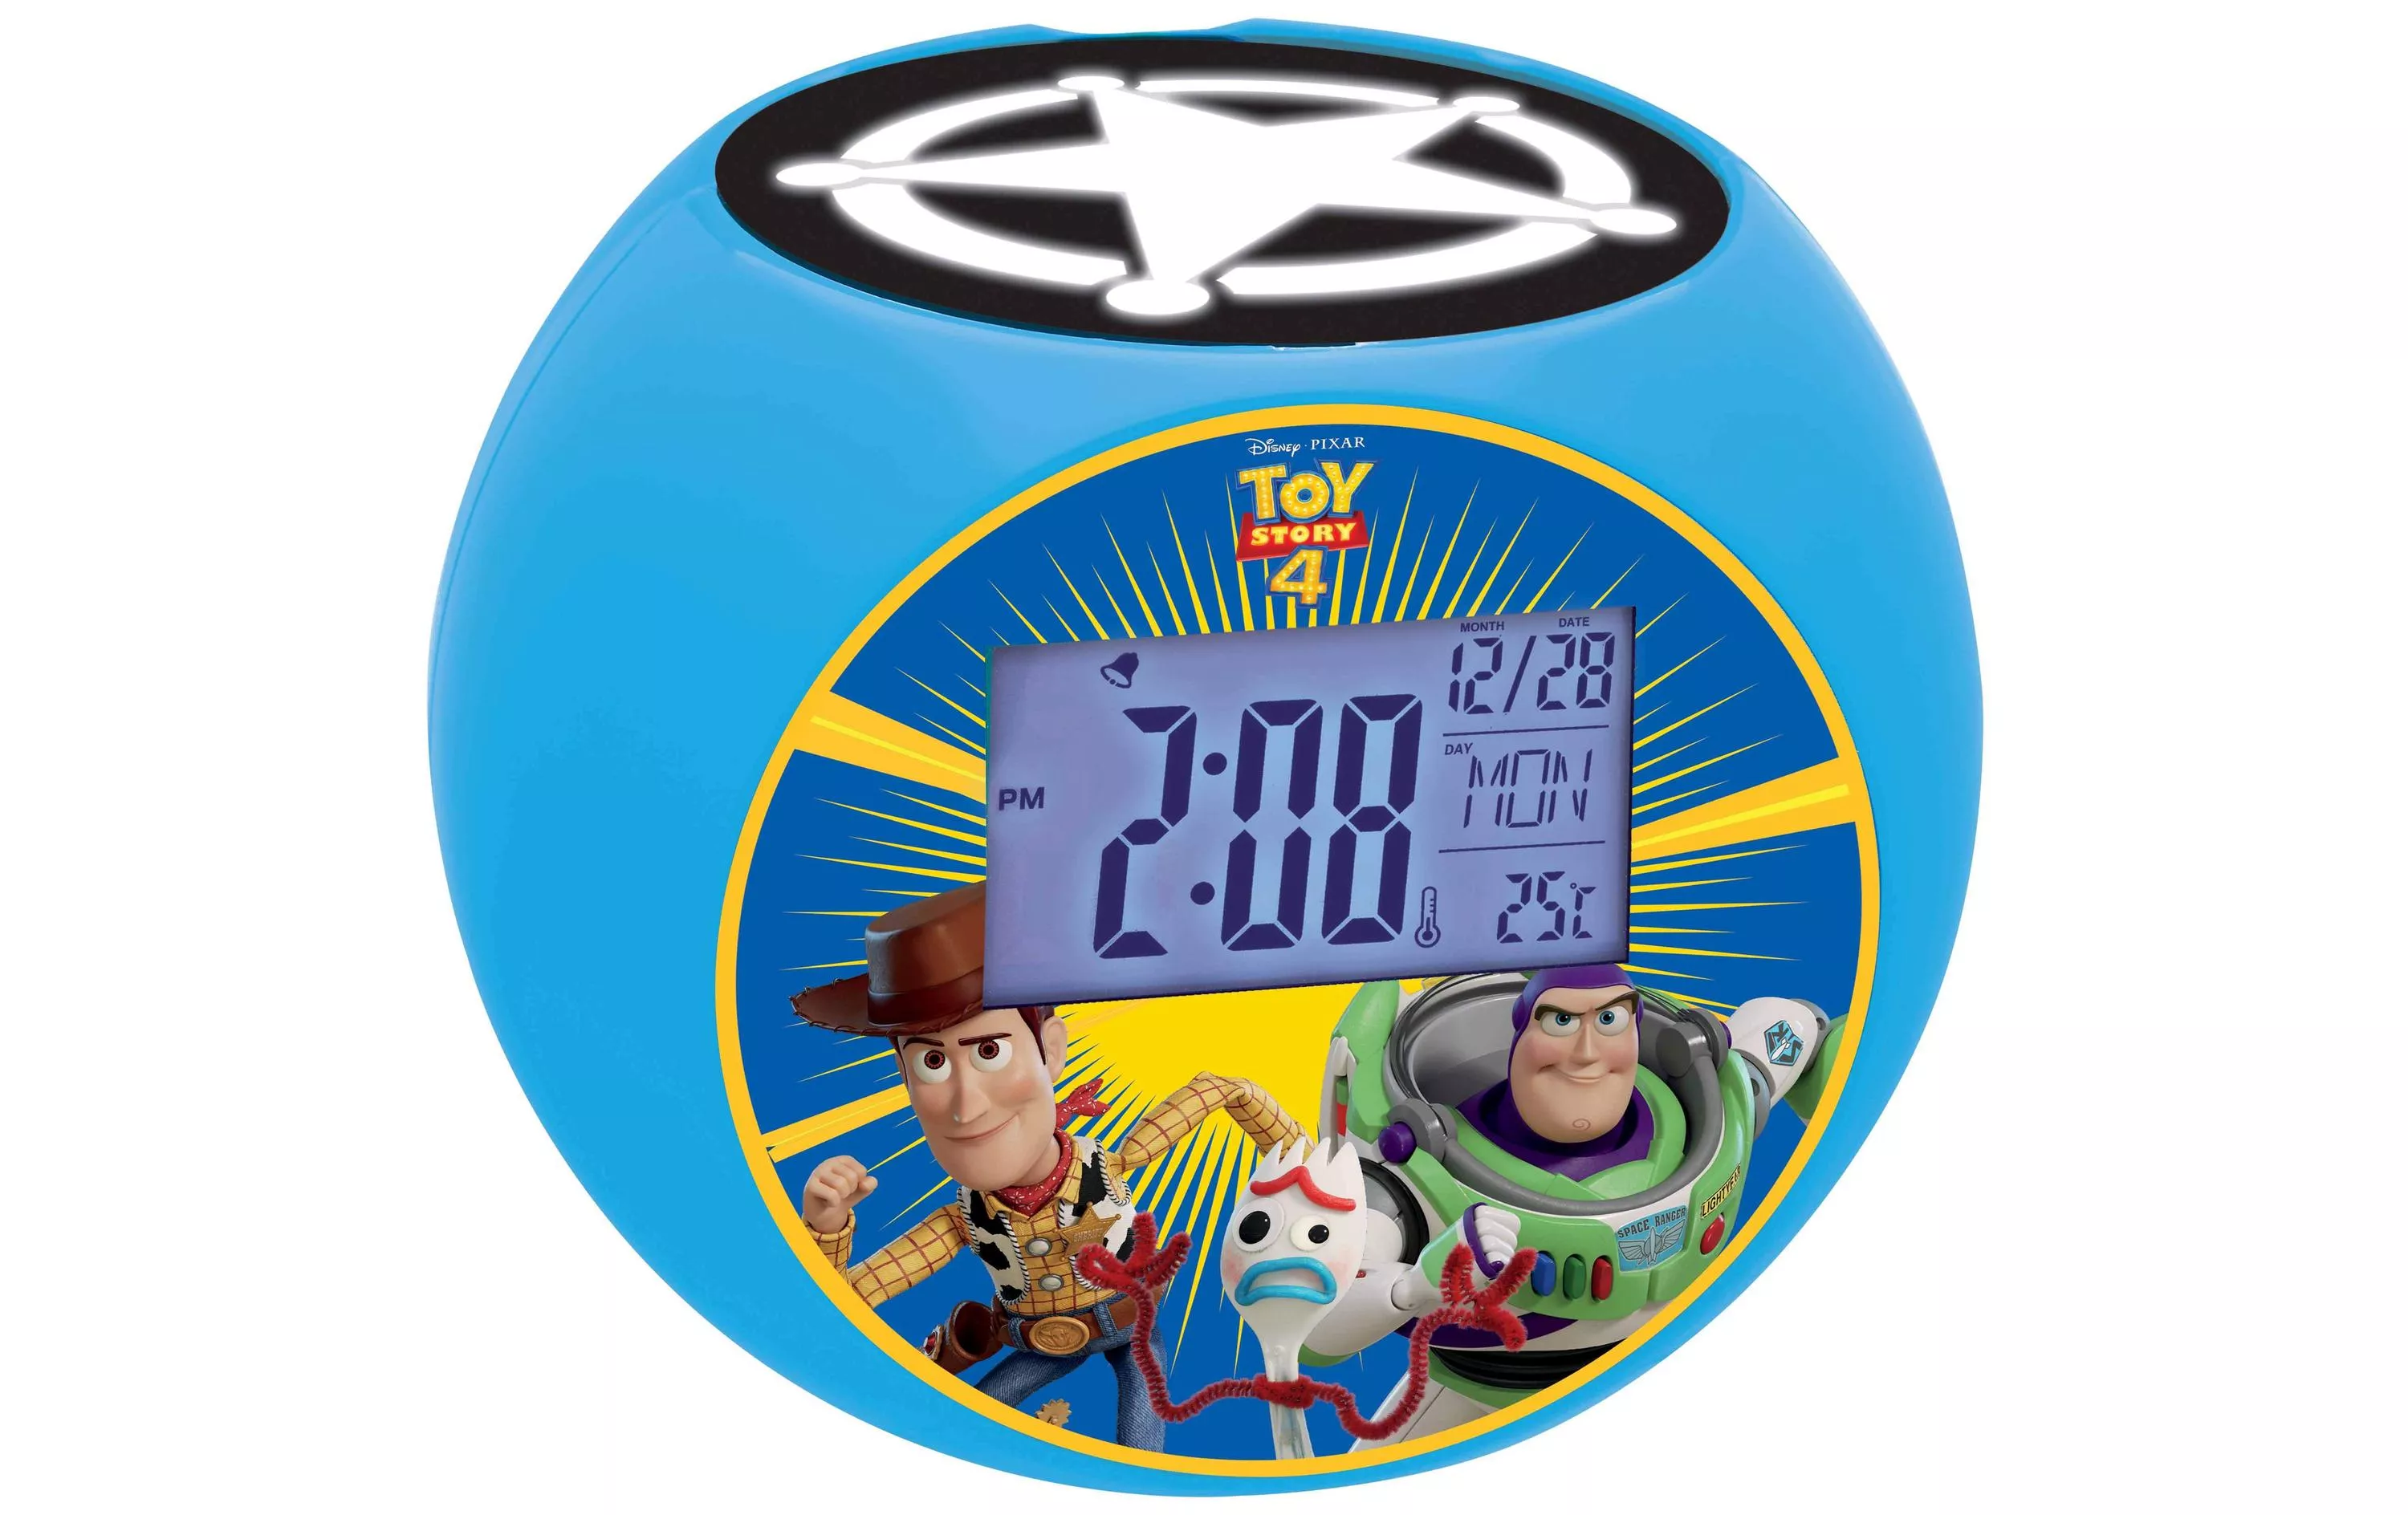 Toy Story Projektionswecker